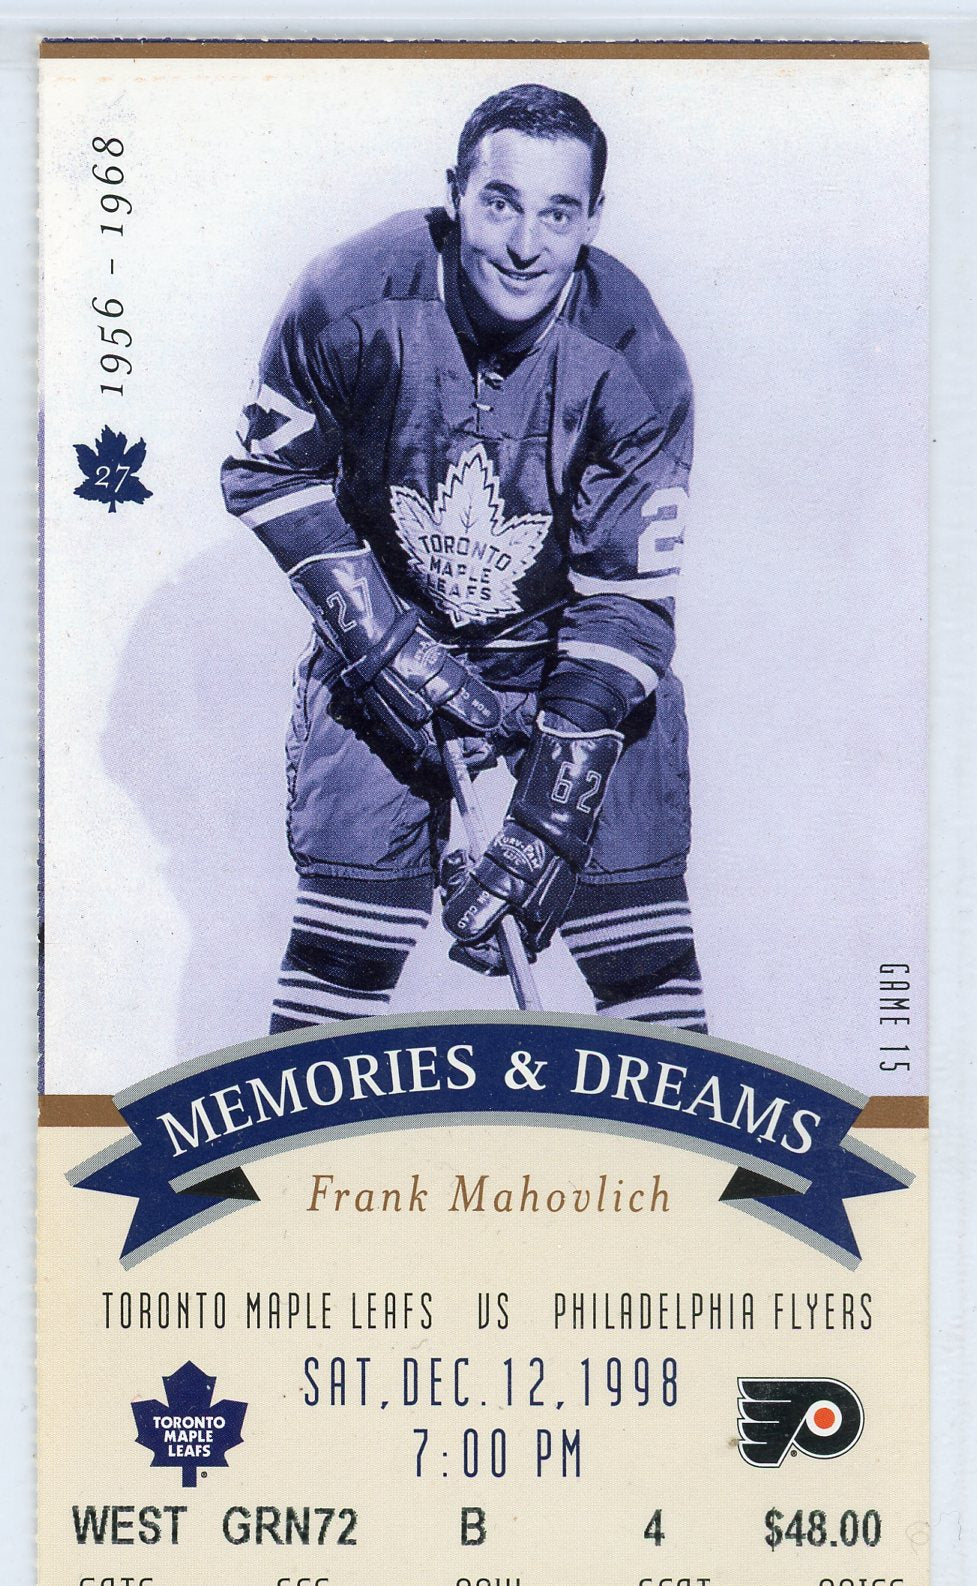 Toronto Maple Leafs vs. Philadelphia Flyers Ticket Stub Maple Leaf Gardens 1998 Frank Mahavolich